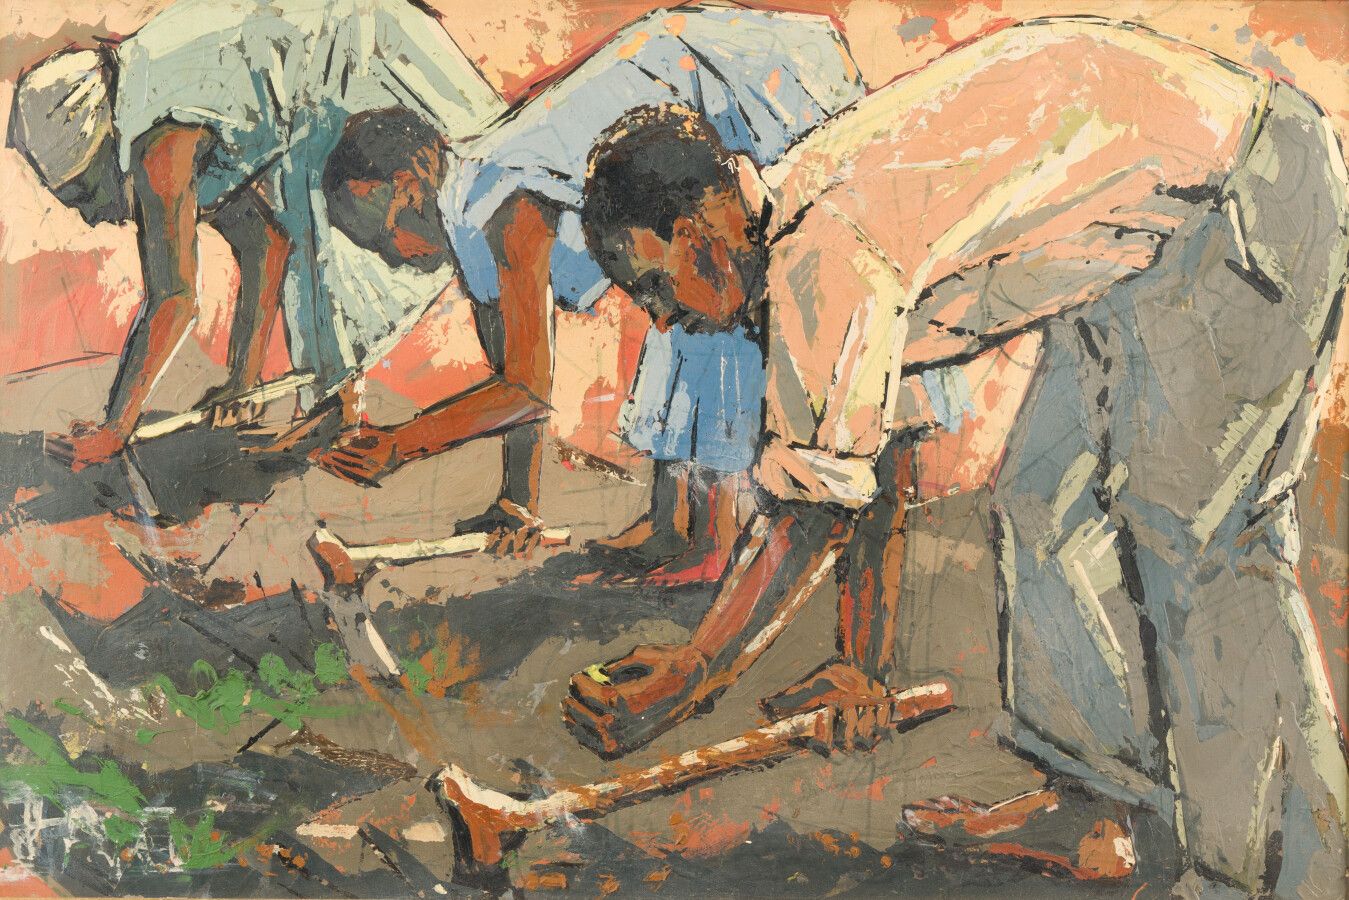 Null John A. WILLINGS (siglo XX-XXI)

Zambia

Óleo sobre cartón.

51 X 76 cm.